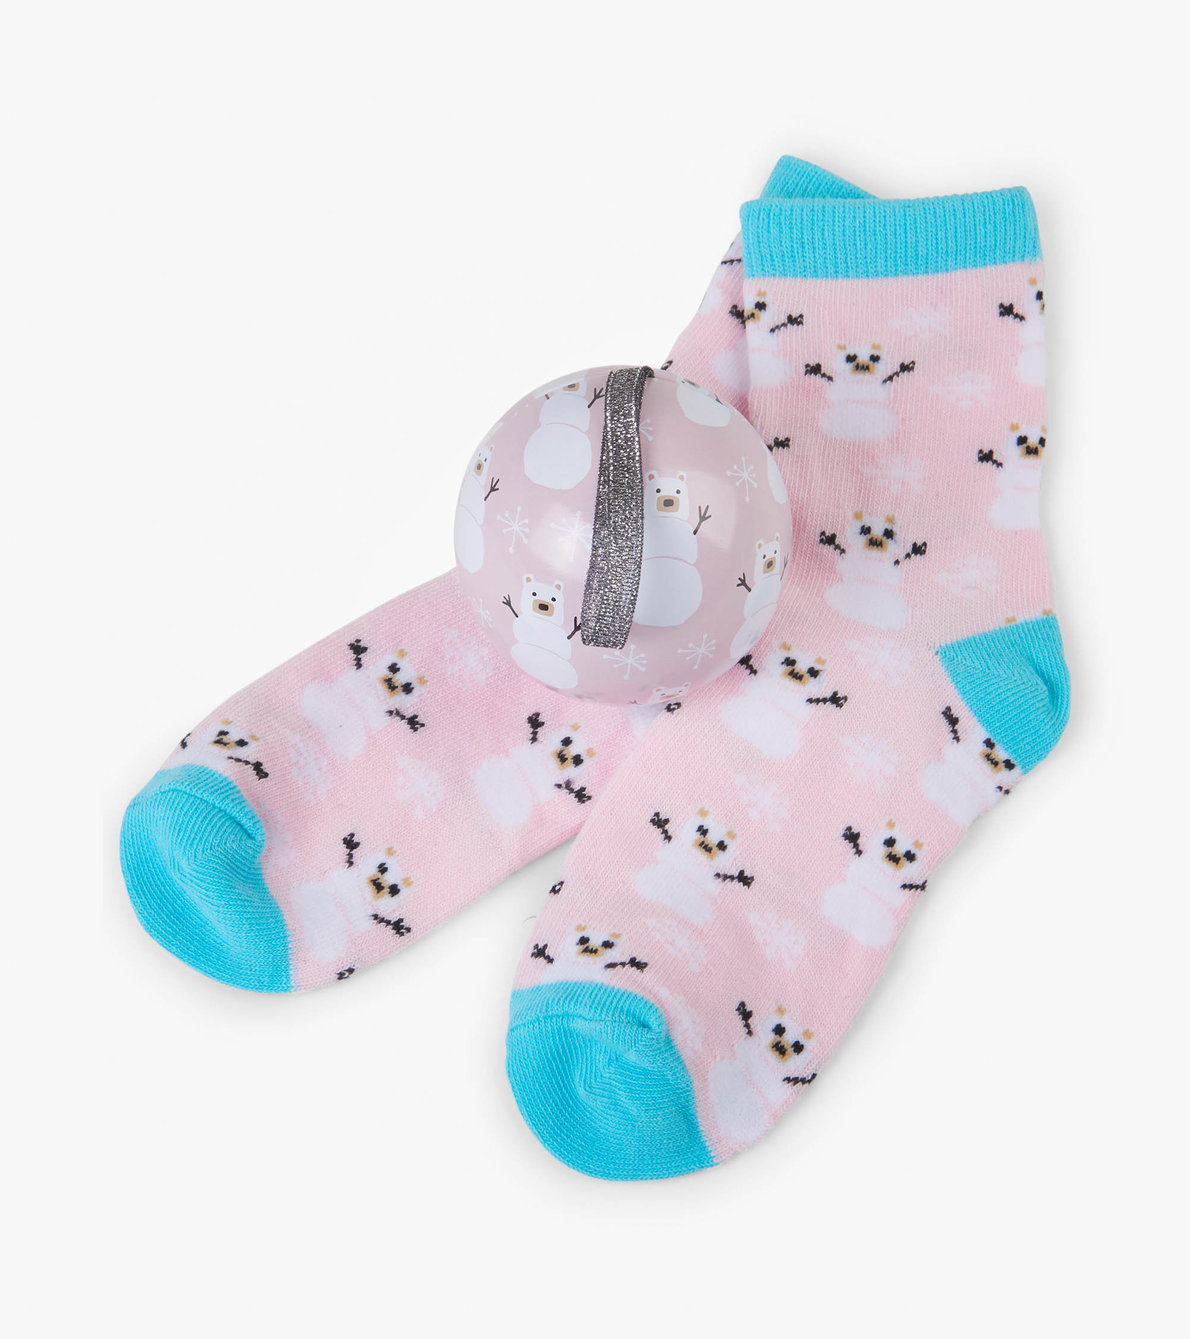 View larger image of Pink Snow Bears Kids Socks in Balls